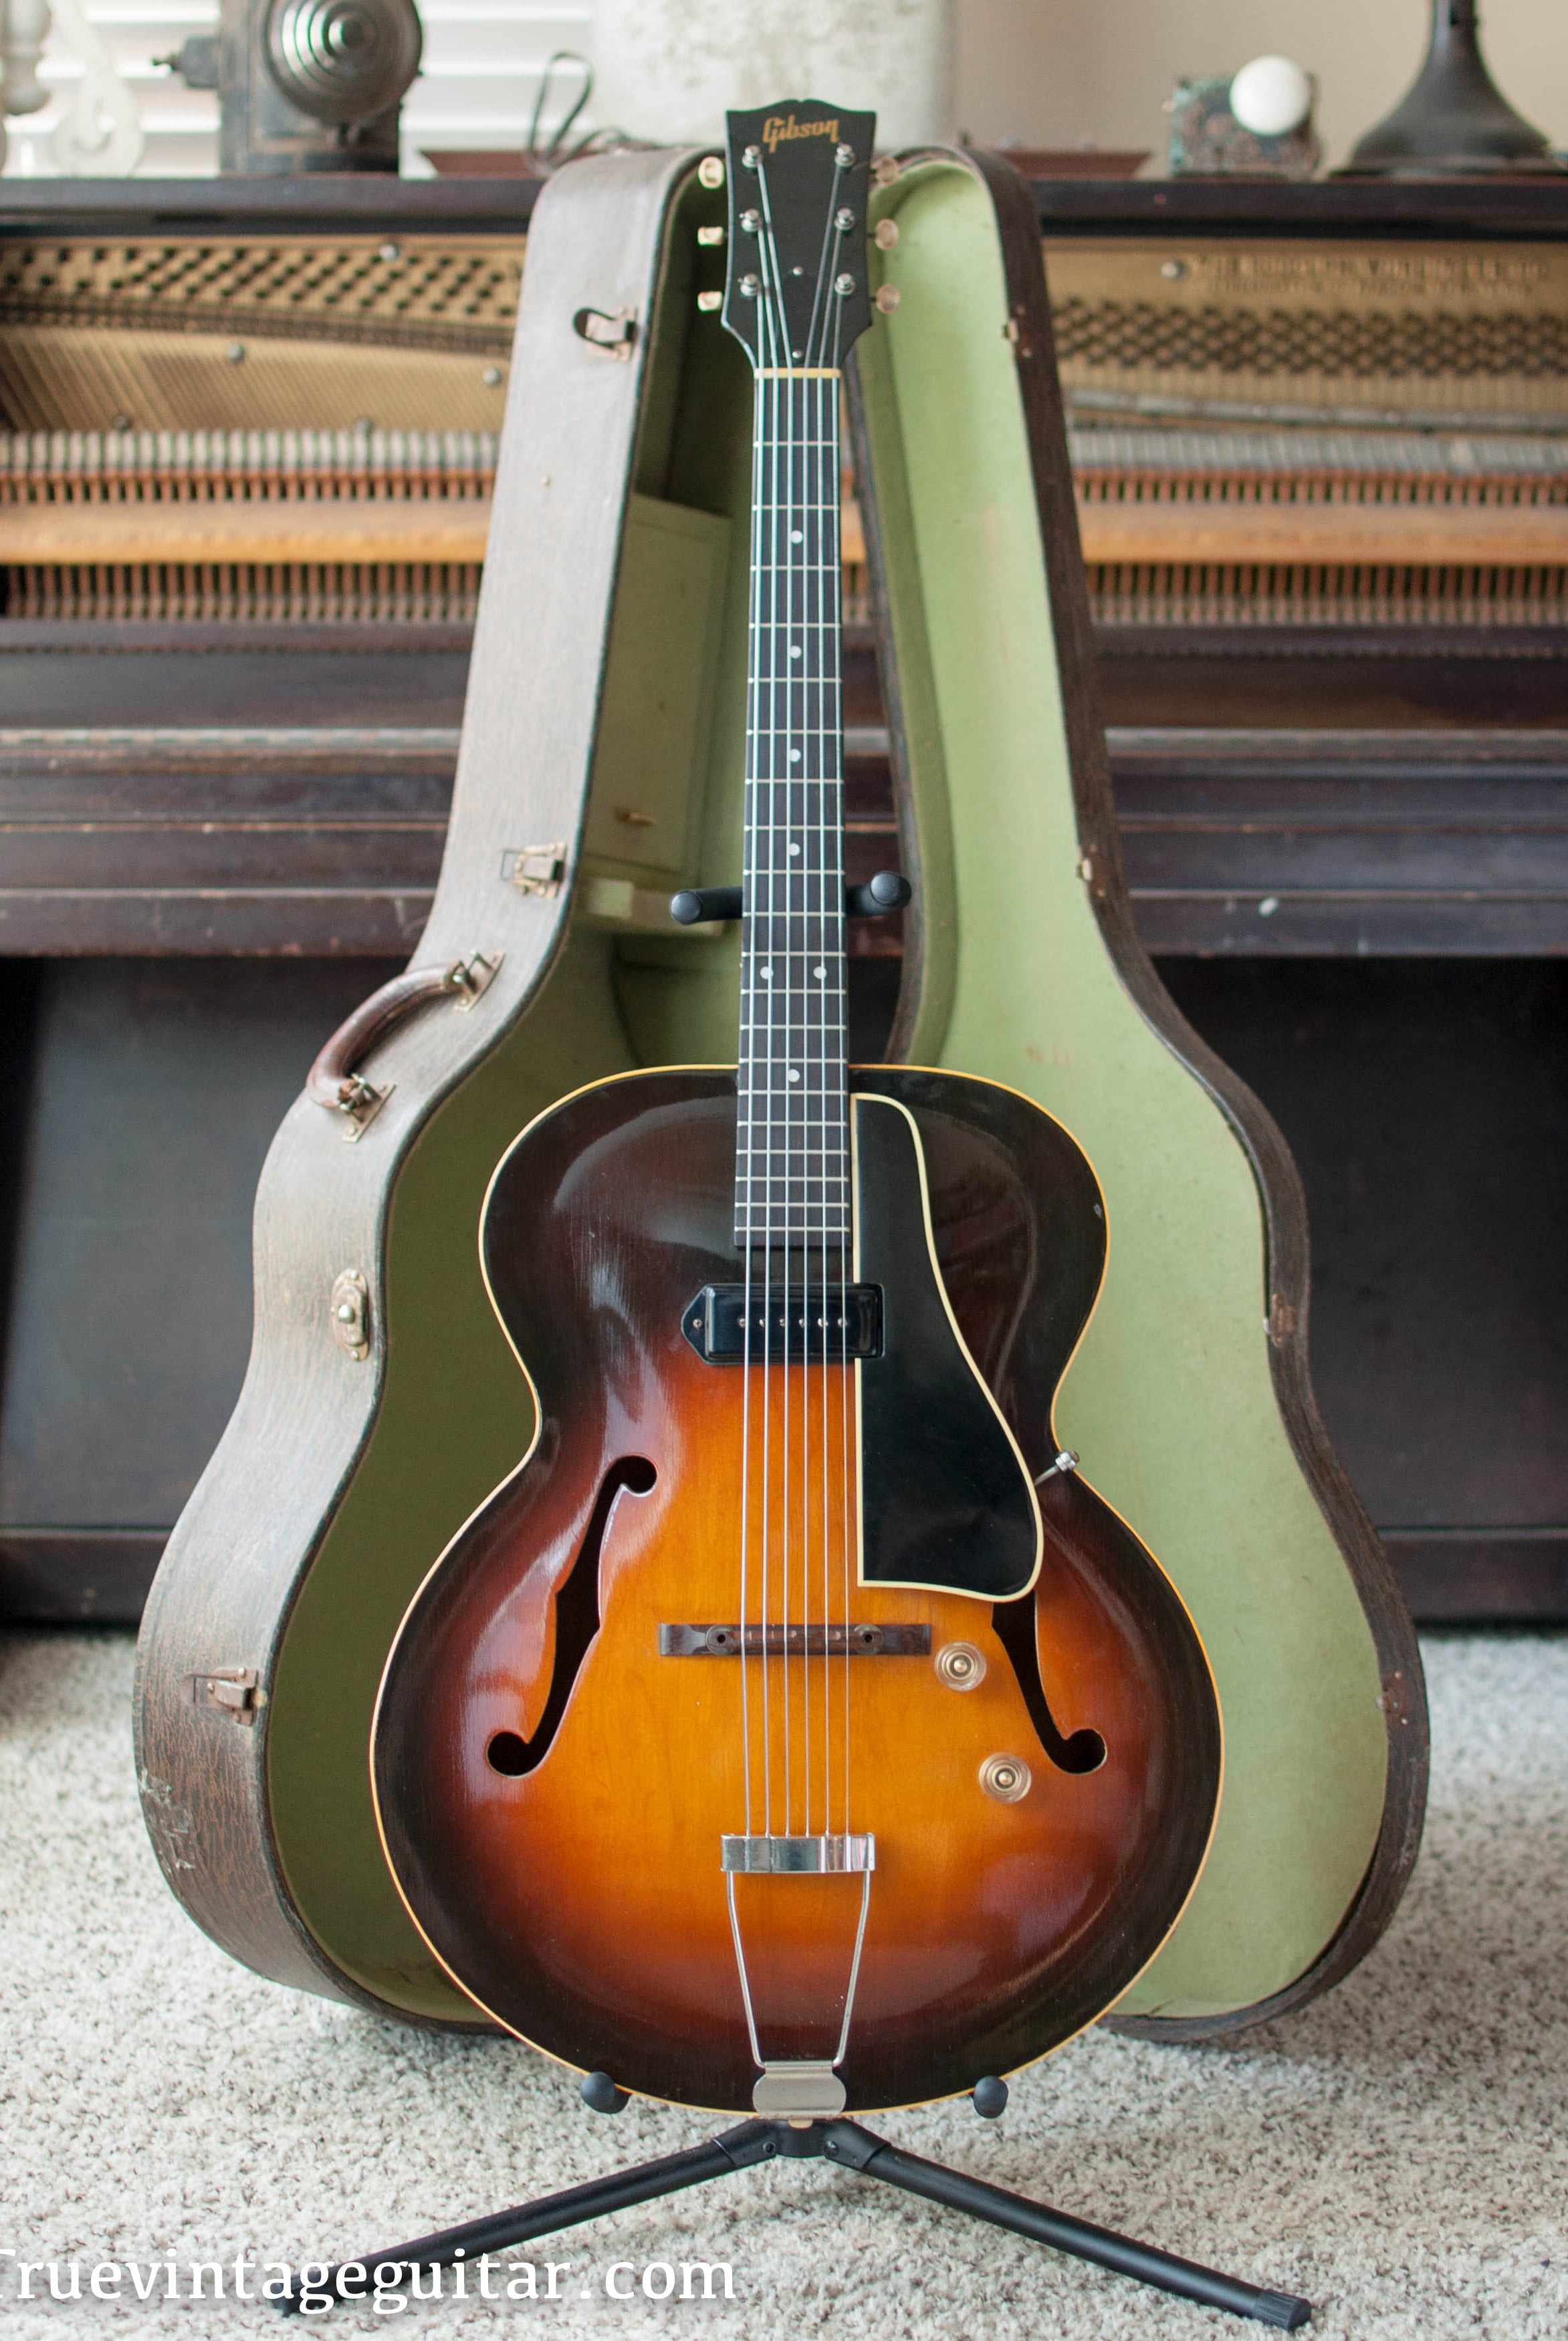 Vintage 1948 Gibson ES-150 archtop guitar